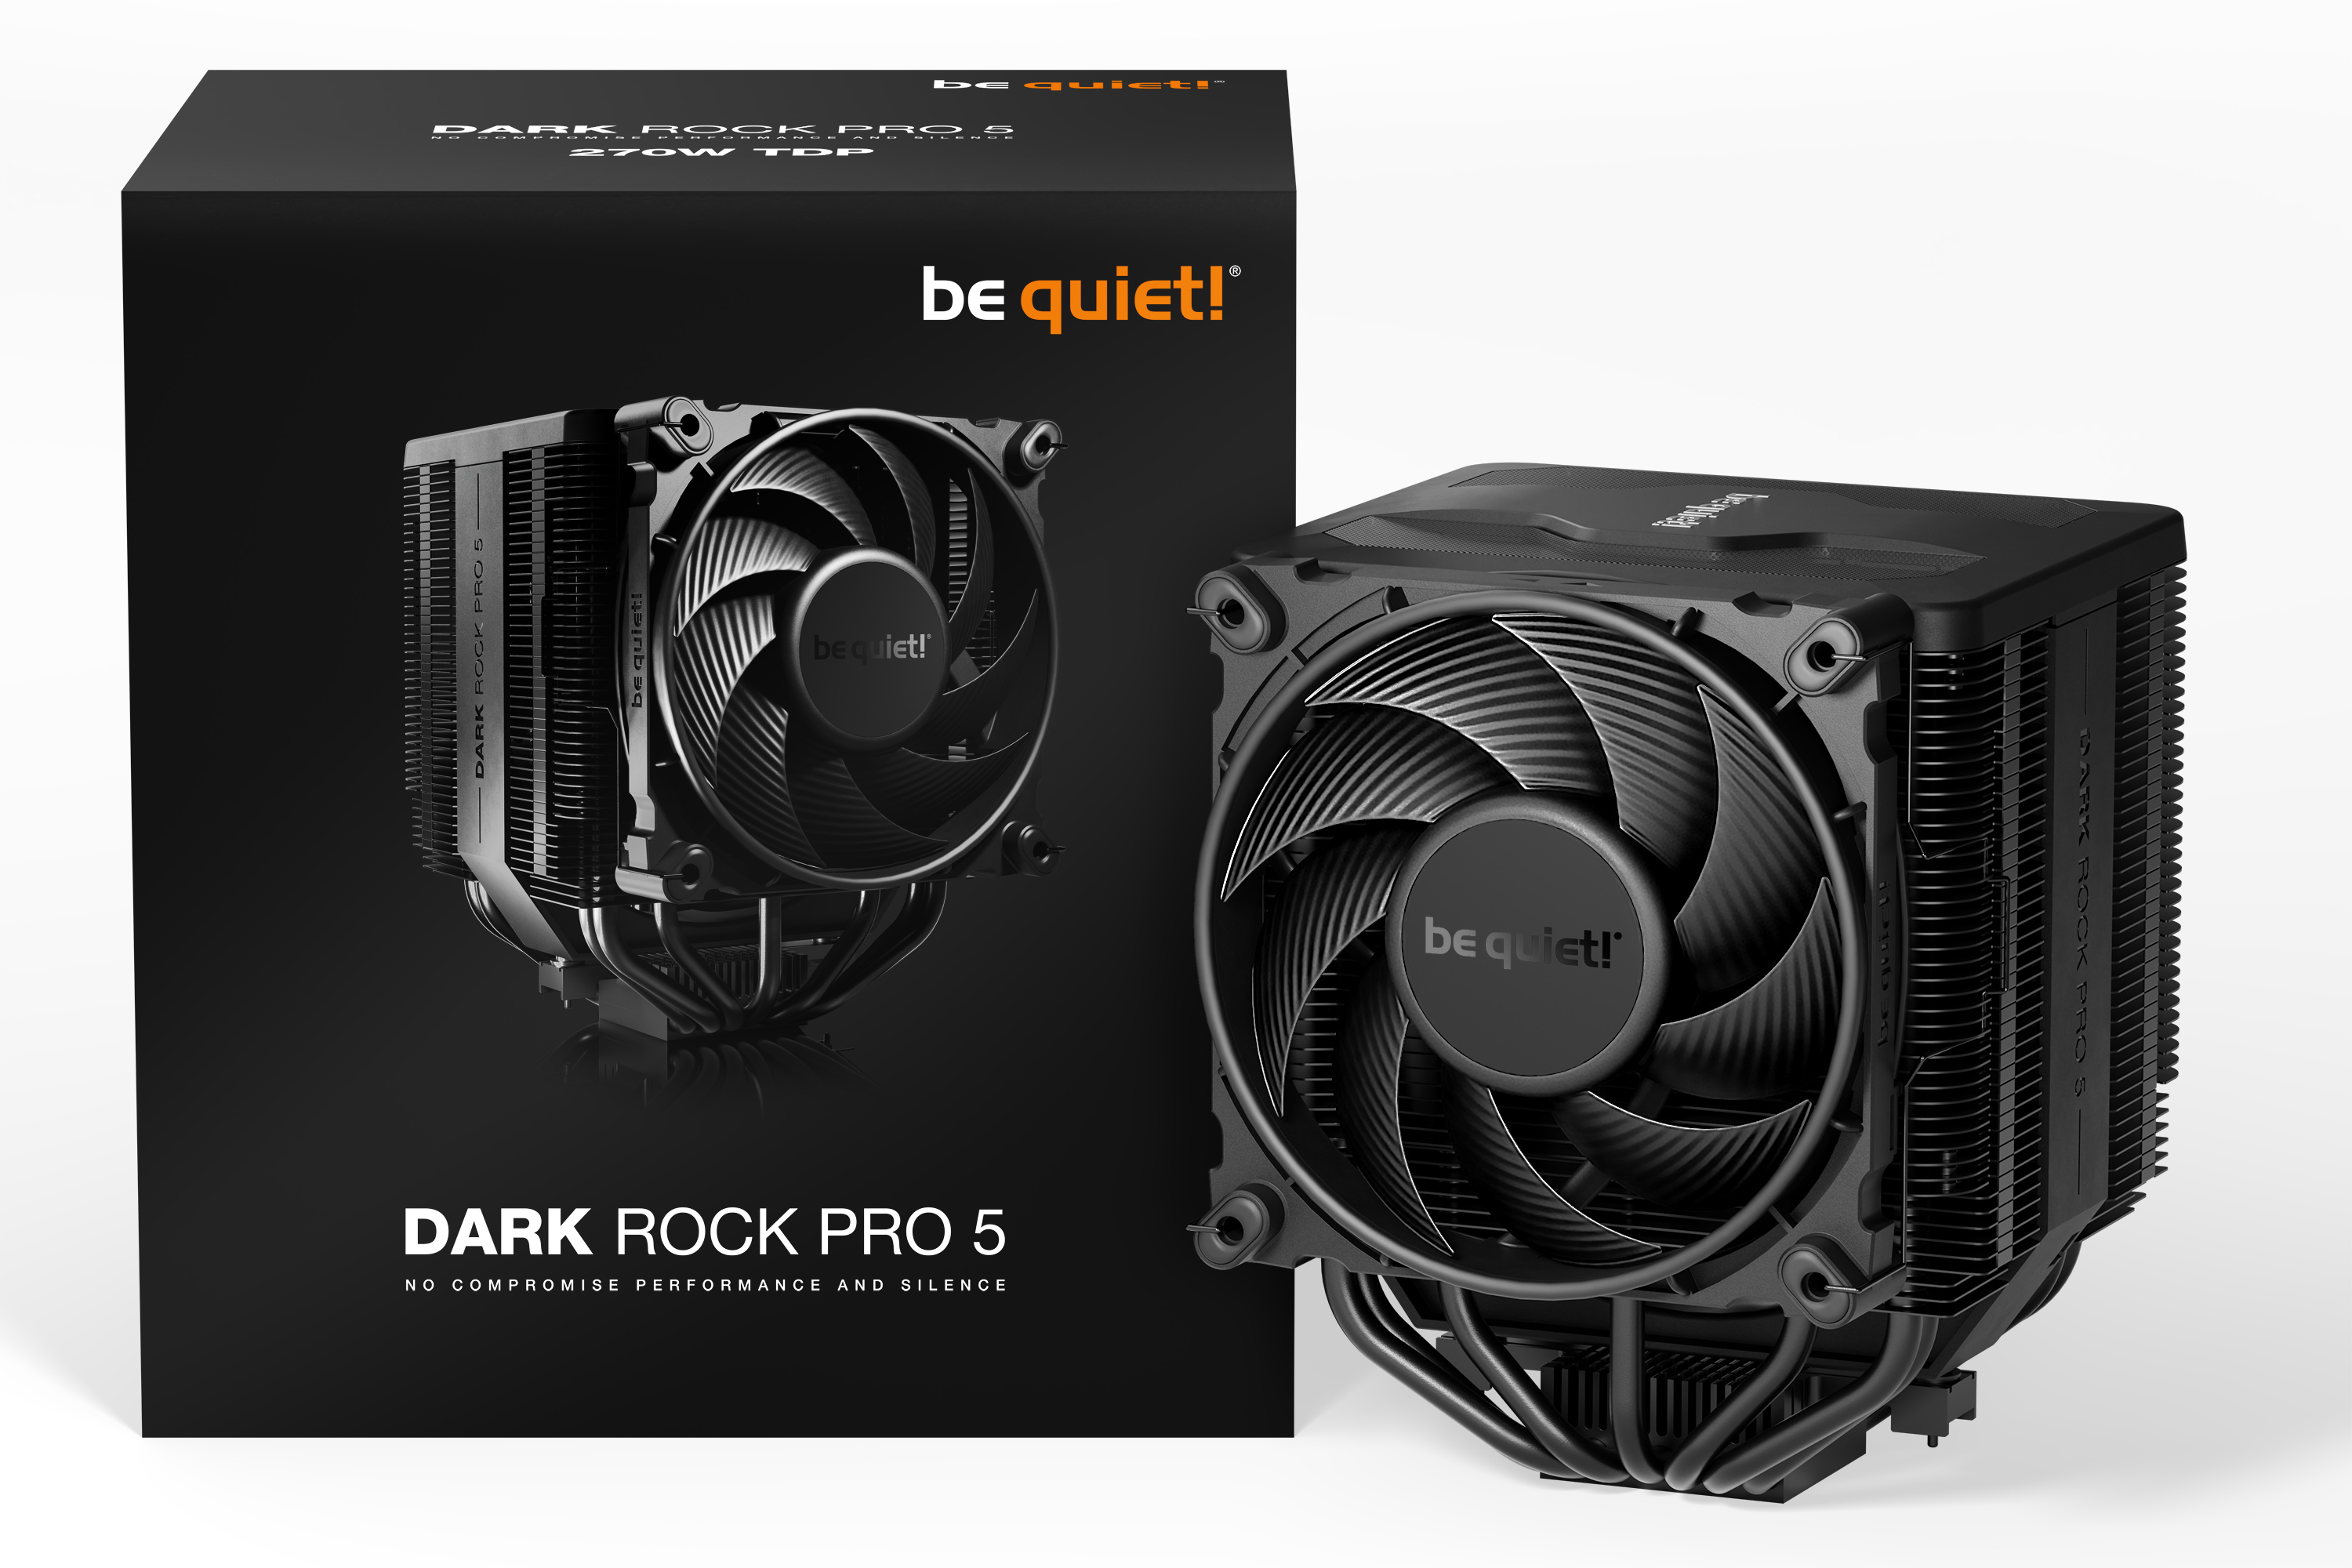 be quiet!: the new Dark Rock Pro 5 and Dark Rock Elite announced